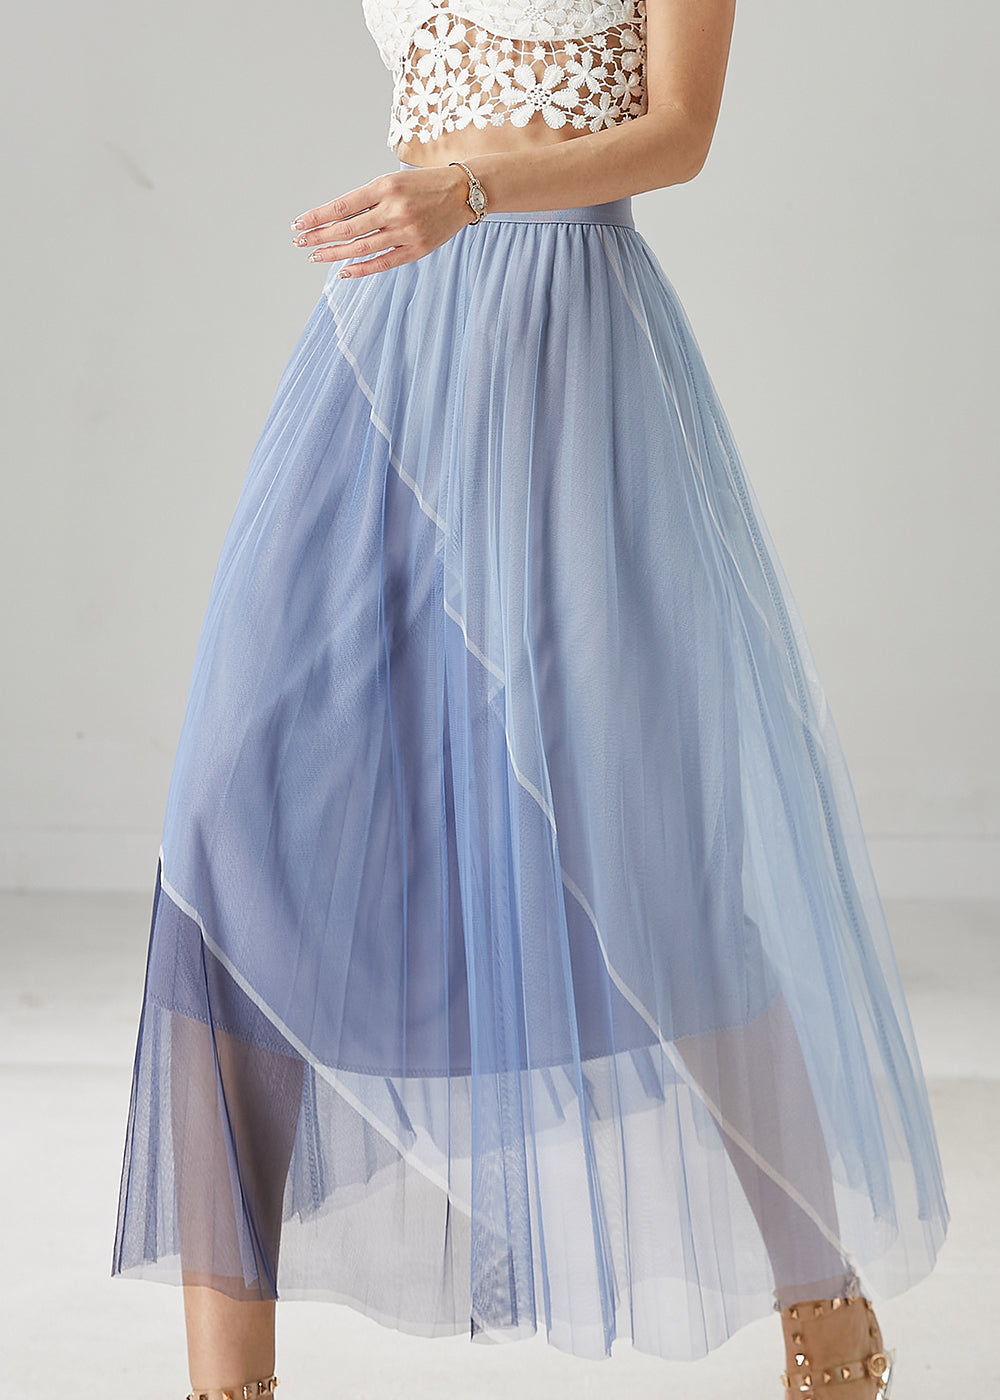 Blue Patchwork Tulle Vacation Skirts Elastic Waist Summer YU1030